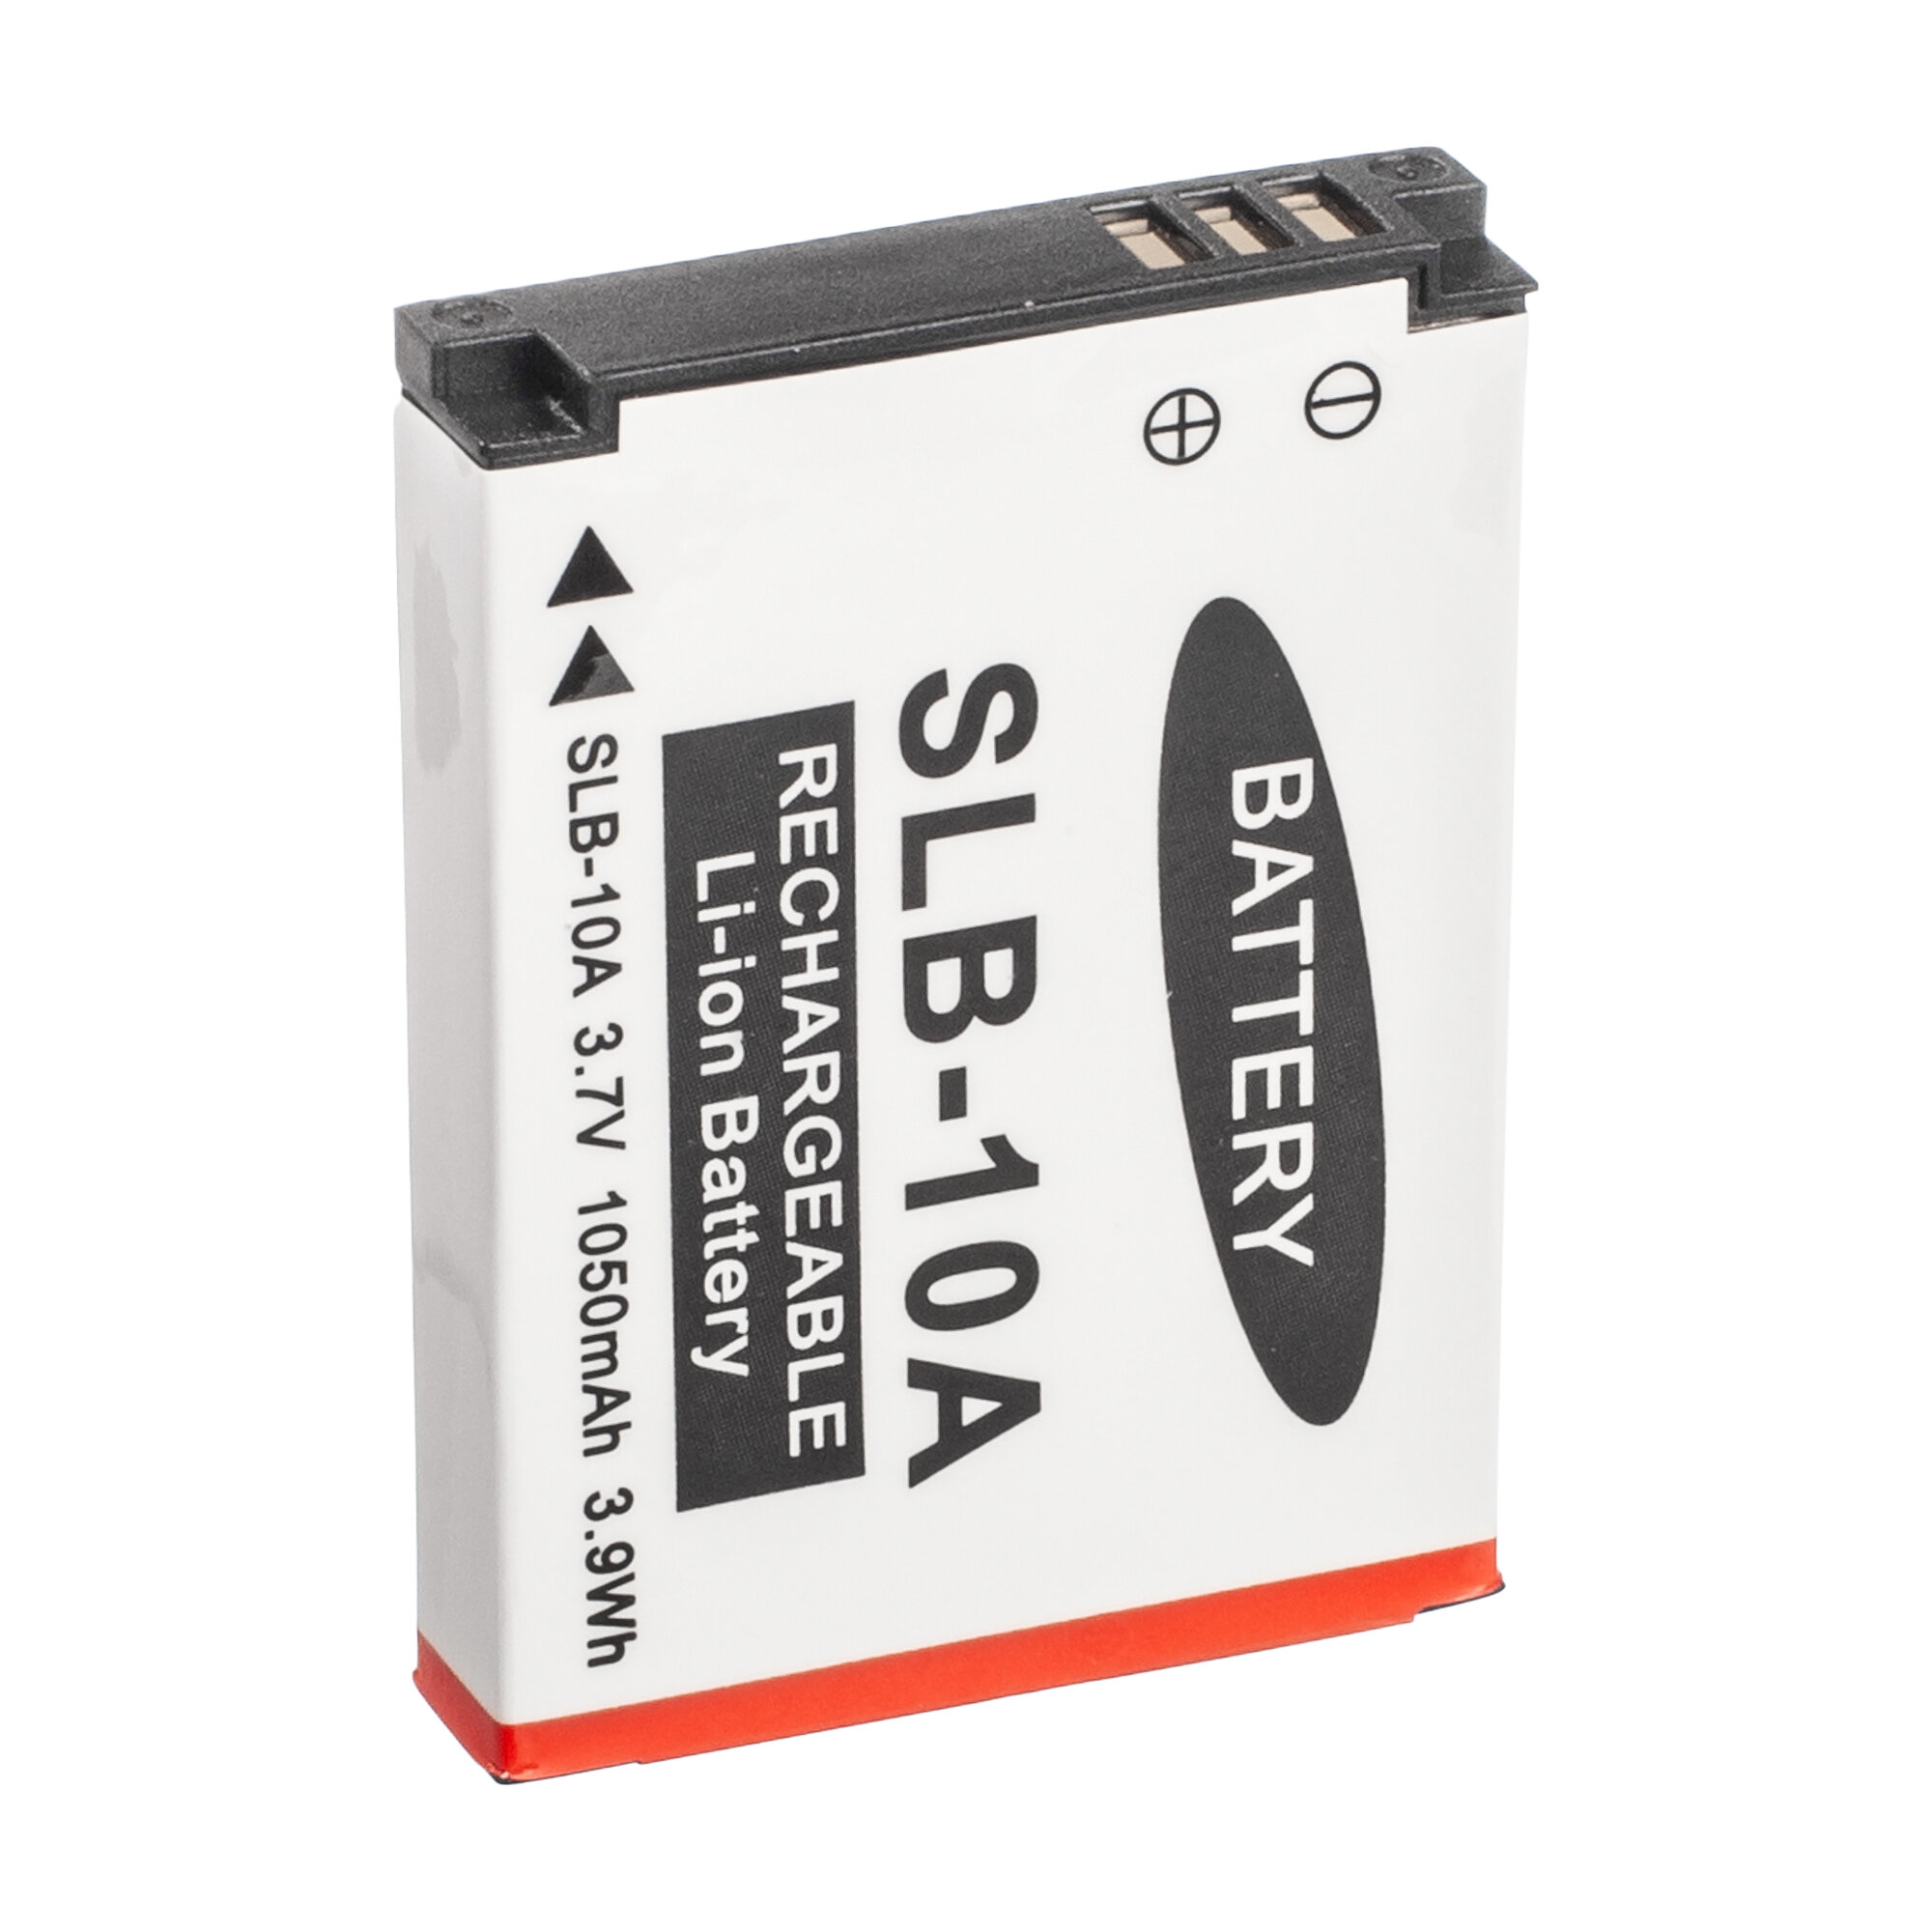 Аккумулятор SLB-10A для фотоаппаратов JVC GC-XA1 ADIXXION | BenQ G1 | Samsung Digimax L310W | HMX-U100 - 1050mah